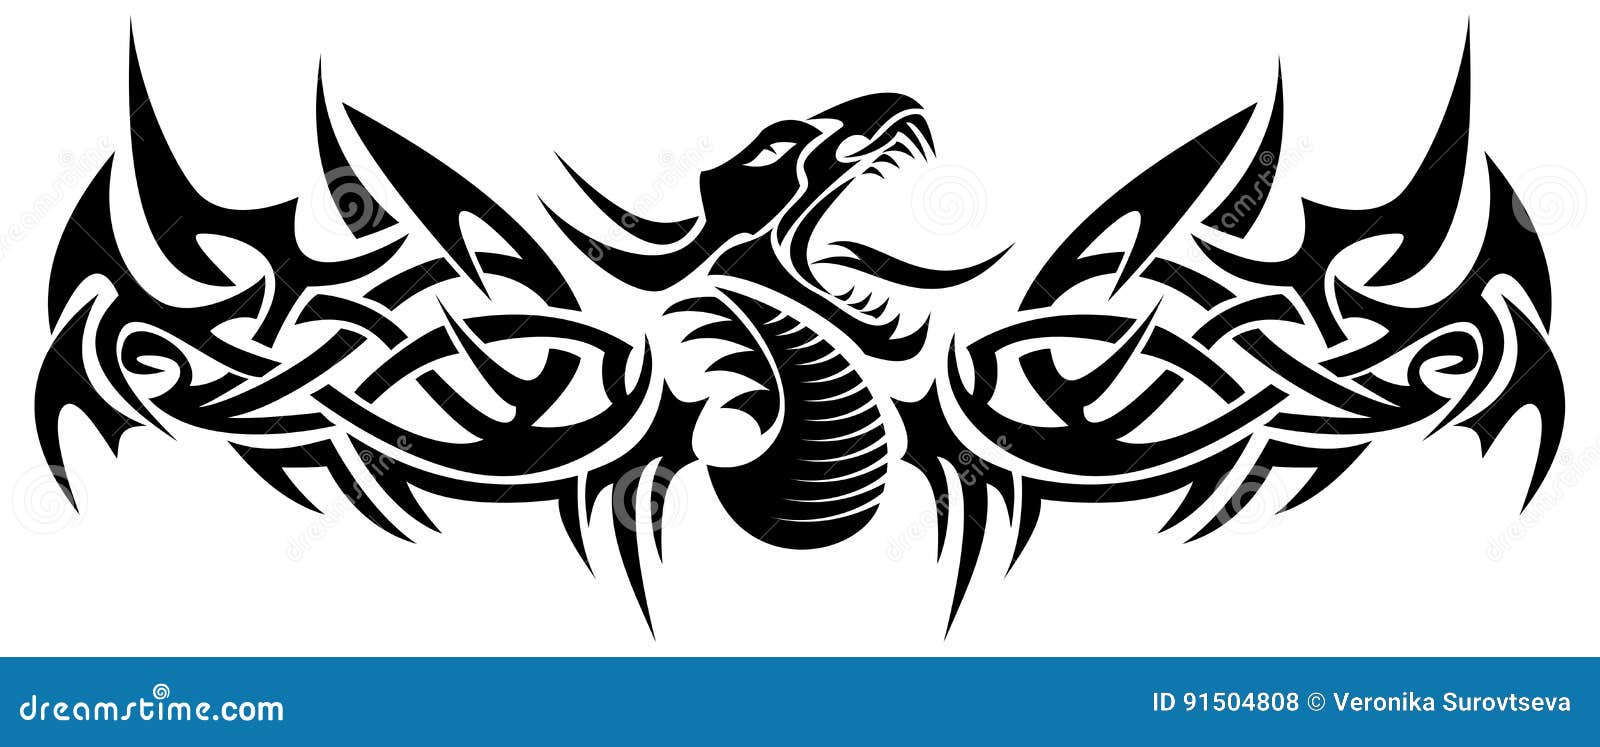 Black tribal dragon tattoo stock illustration. Illustration of ...